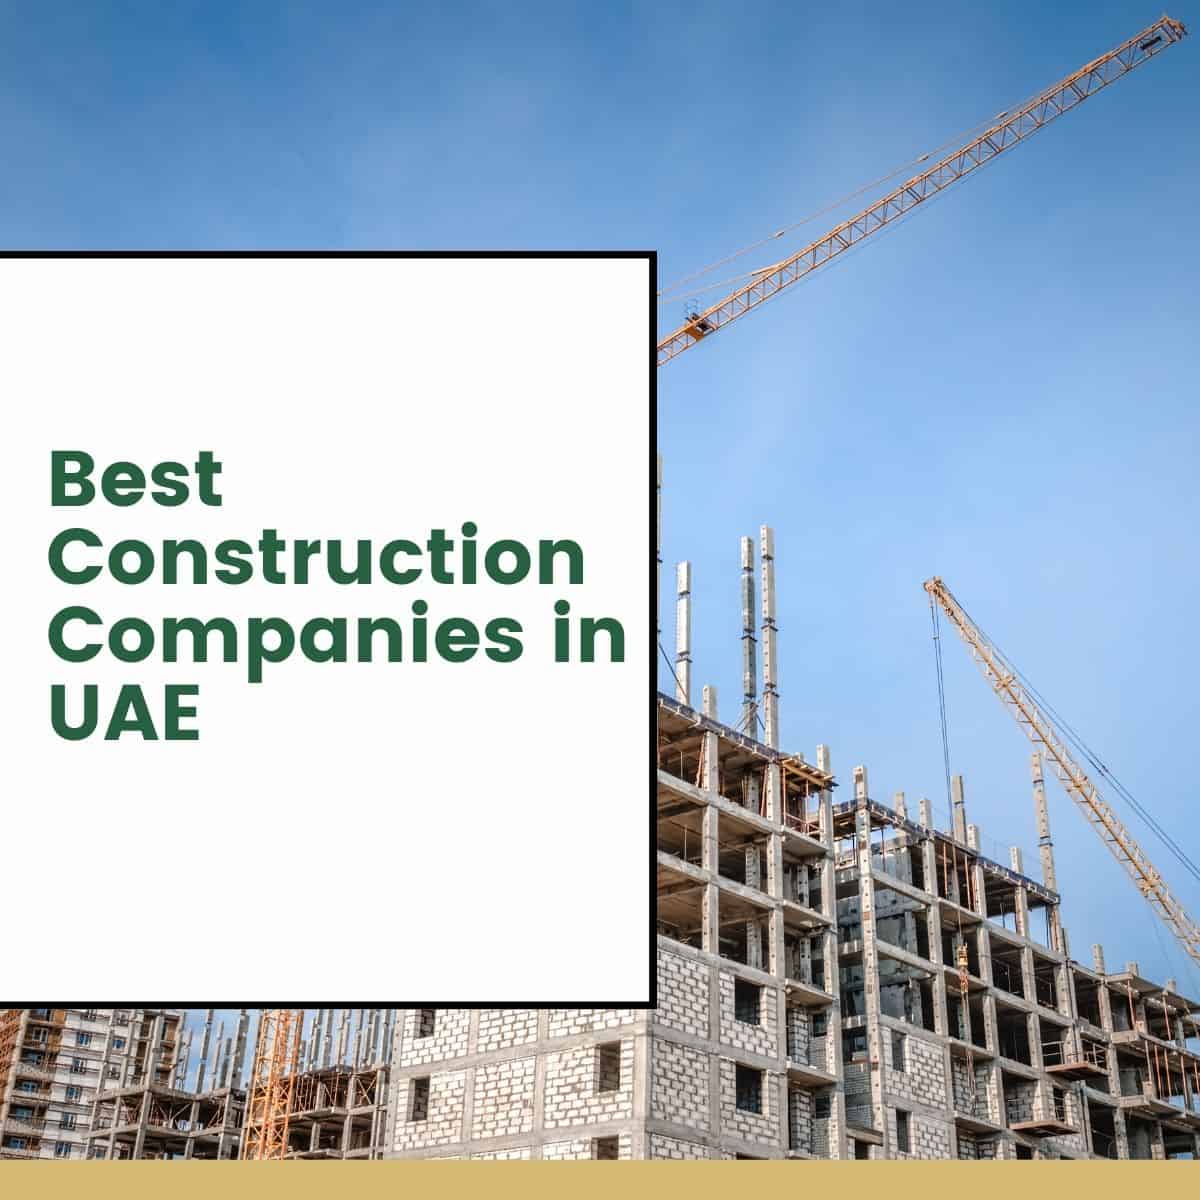 Best Construction Companies in UAE